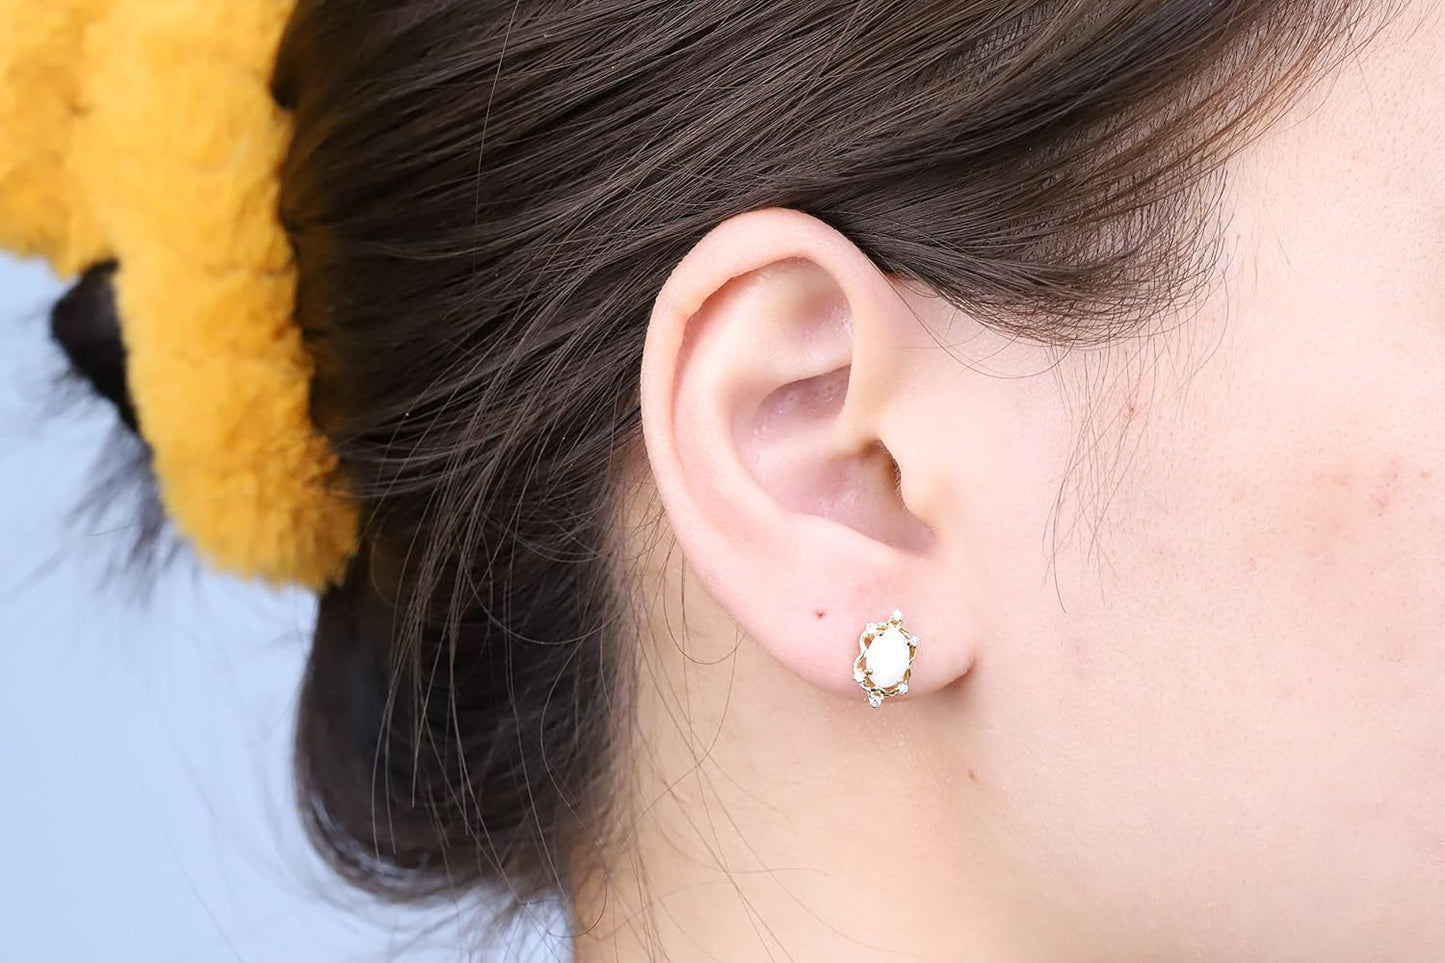 Women'S 10K Yellow Gold Natural Australian Opal Earrings with Diamonds (Oval-Cut) Shaped